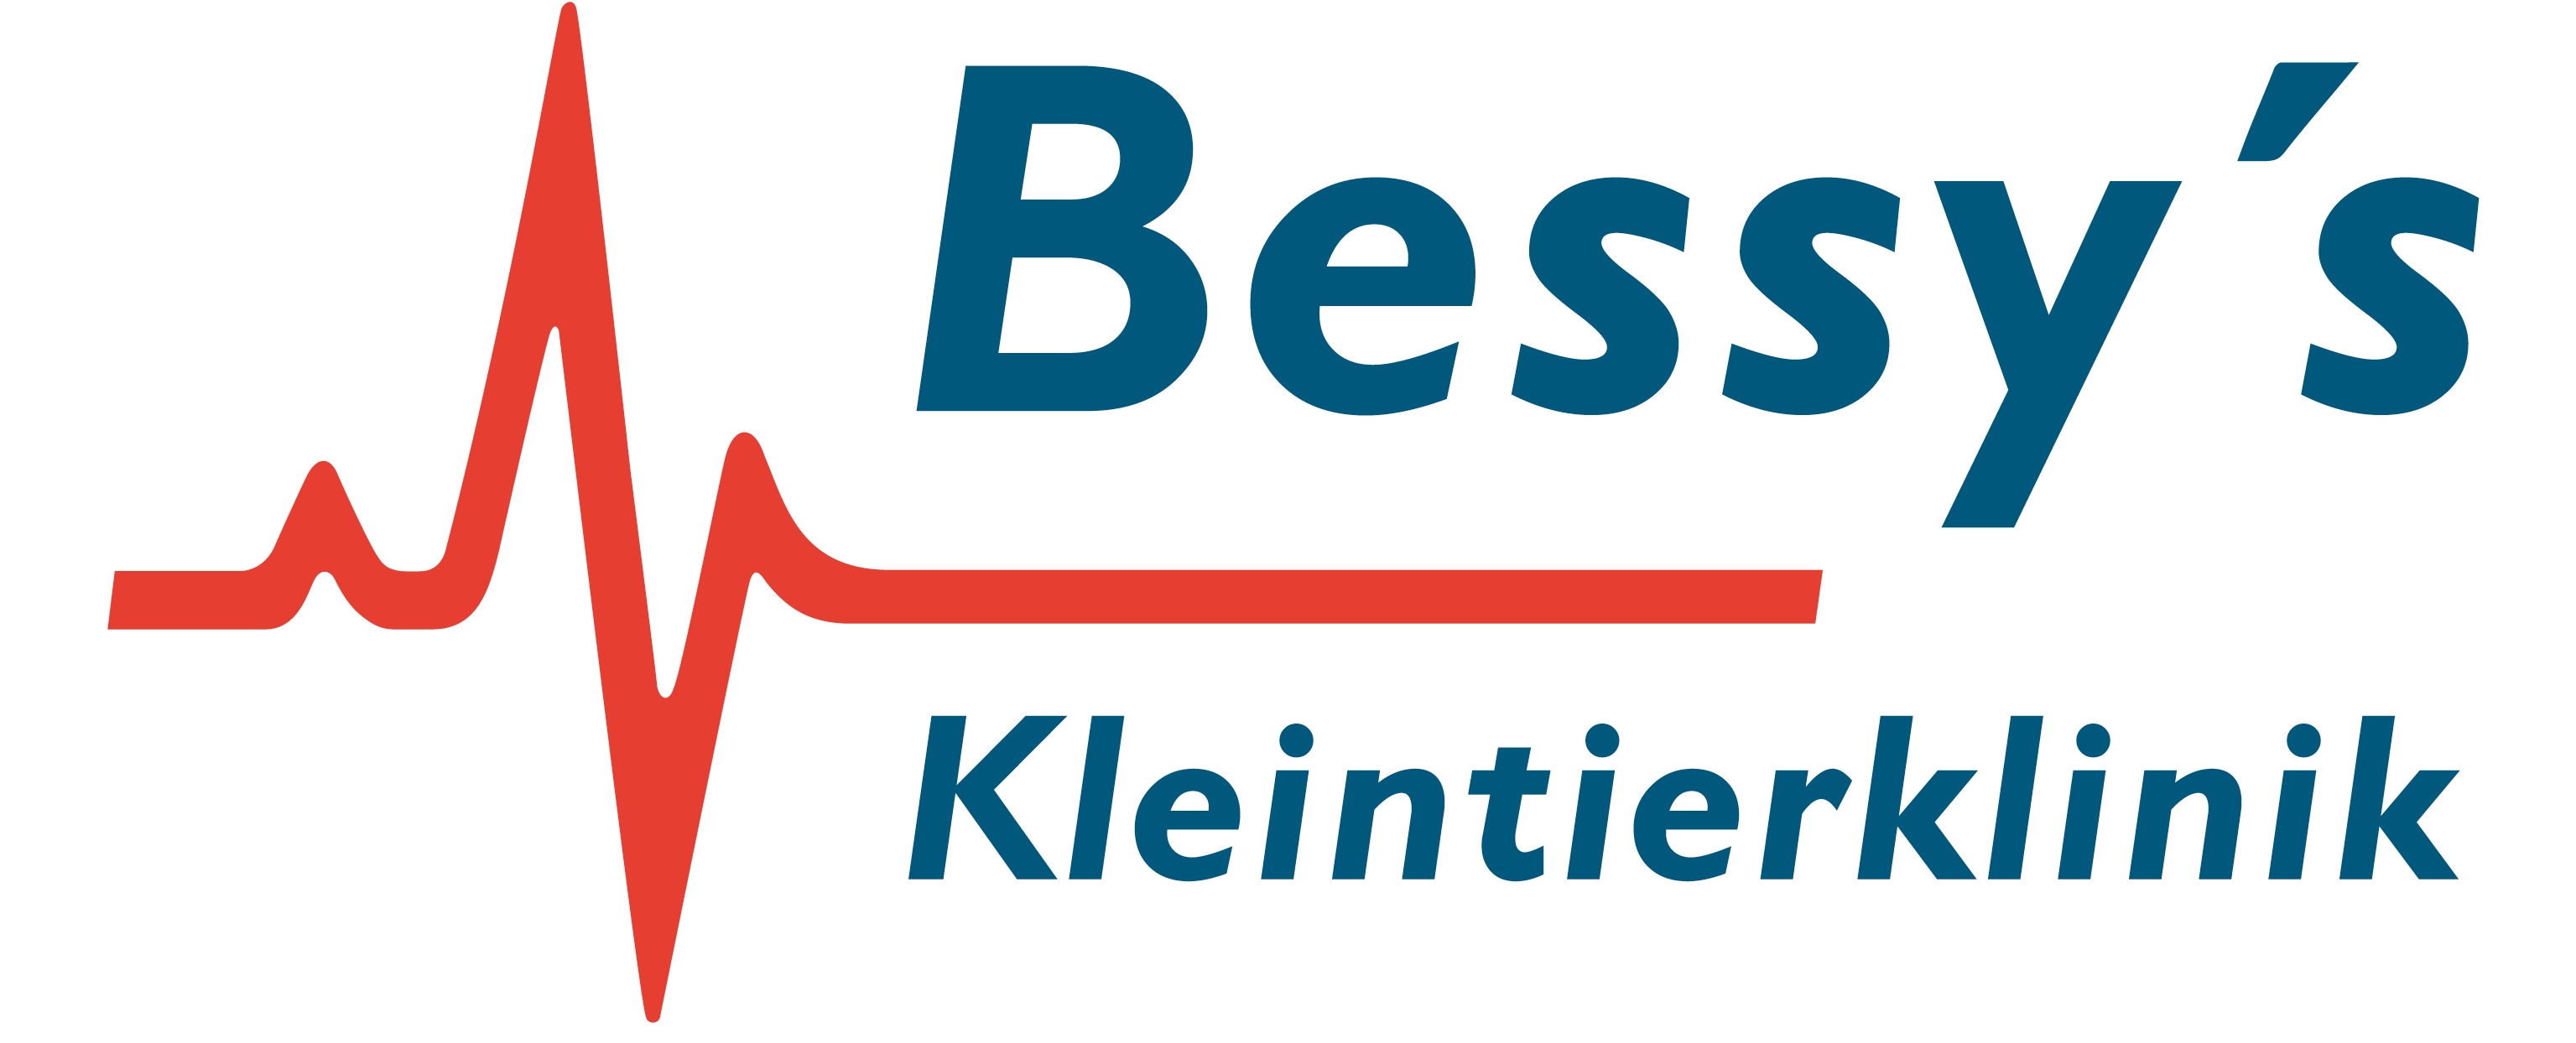 Bessy's Kleintierklinik, Zn IVC Evidensia Schweiz AG